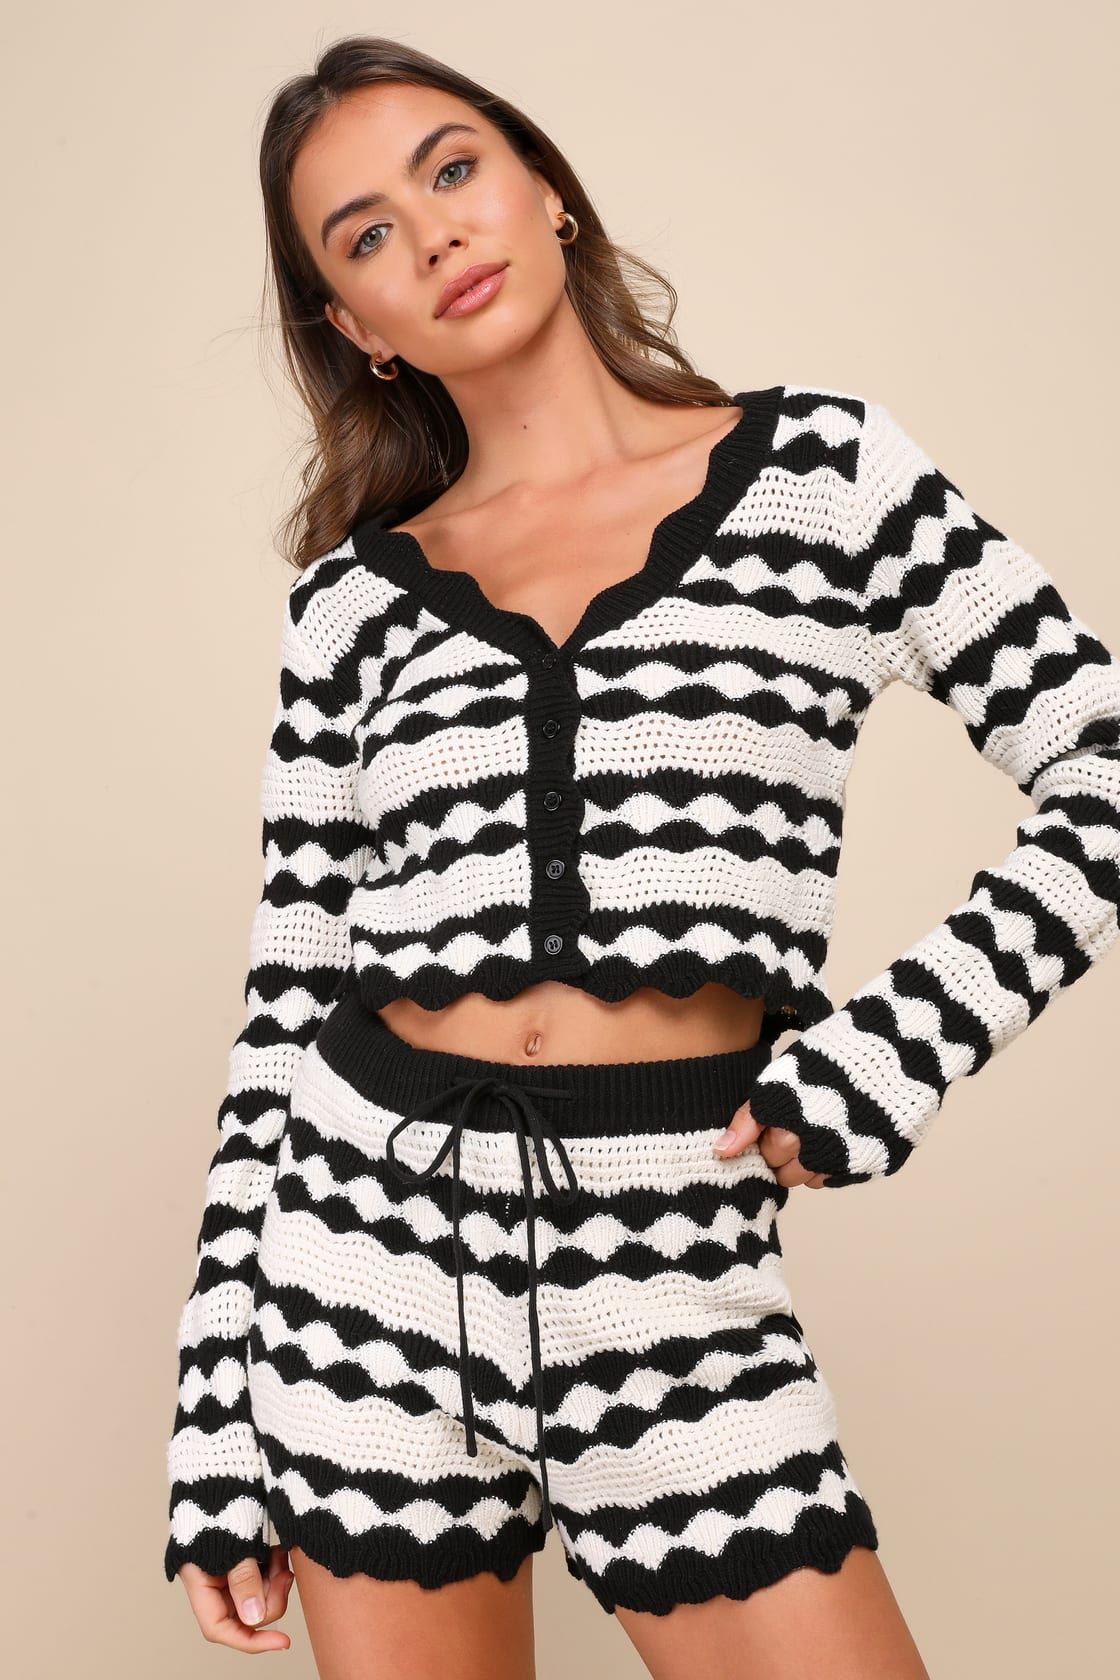 Stylish Bliss Ivory and Black Striped Crochet Cardigan | Lulus